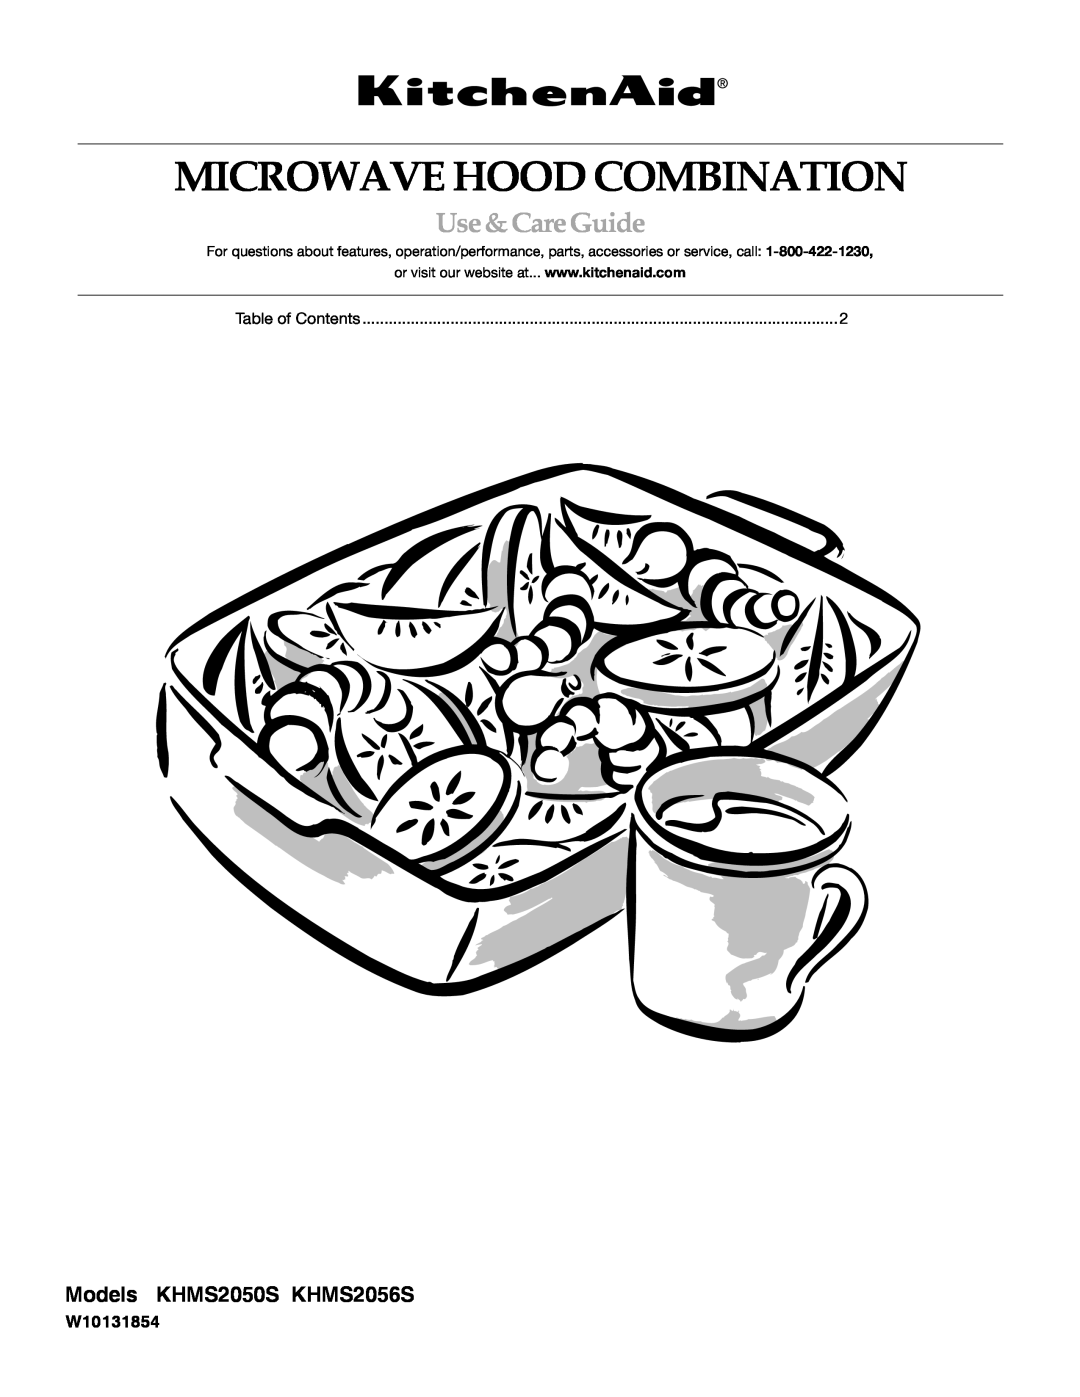 KitchenAid KHMS2056SBL manual Models KHMS2050S KHMS2056S, Microwave Hood Combination, Use&CareGuide, W10131854 